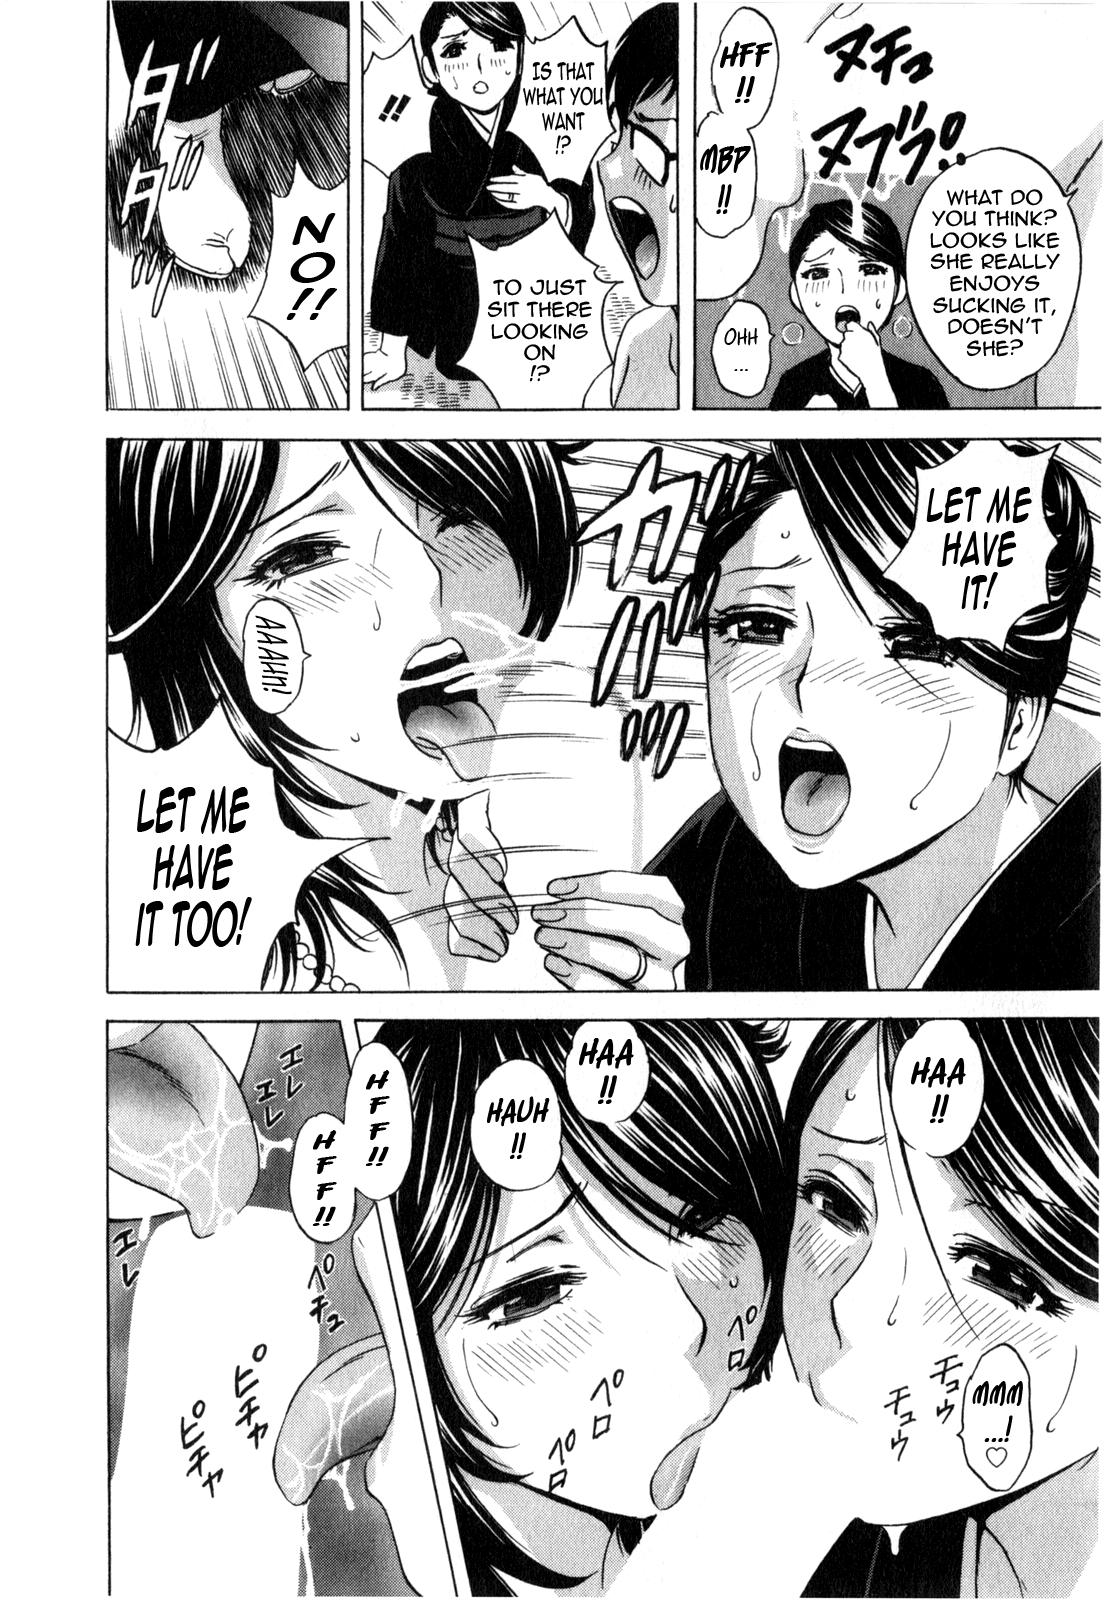 [Hidemaru] Life with Married Women Just Like a Manga 3 - Ch. 1-6 [English] {Tadanohito} 97